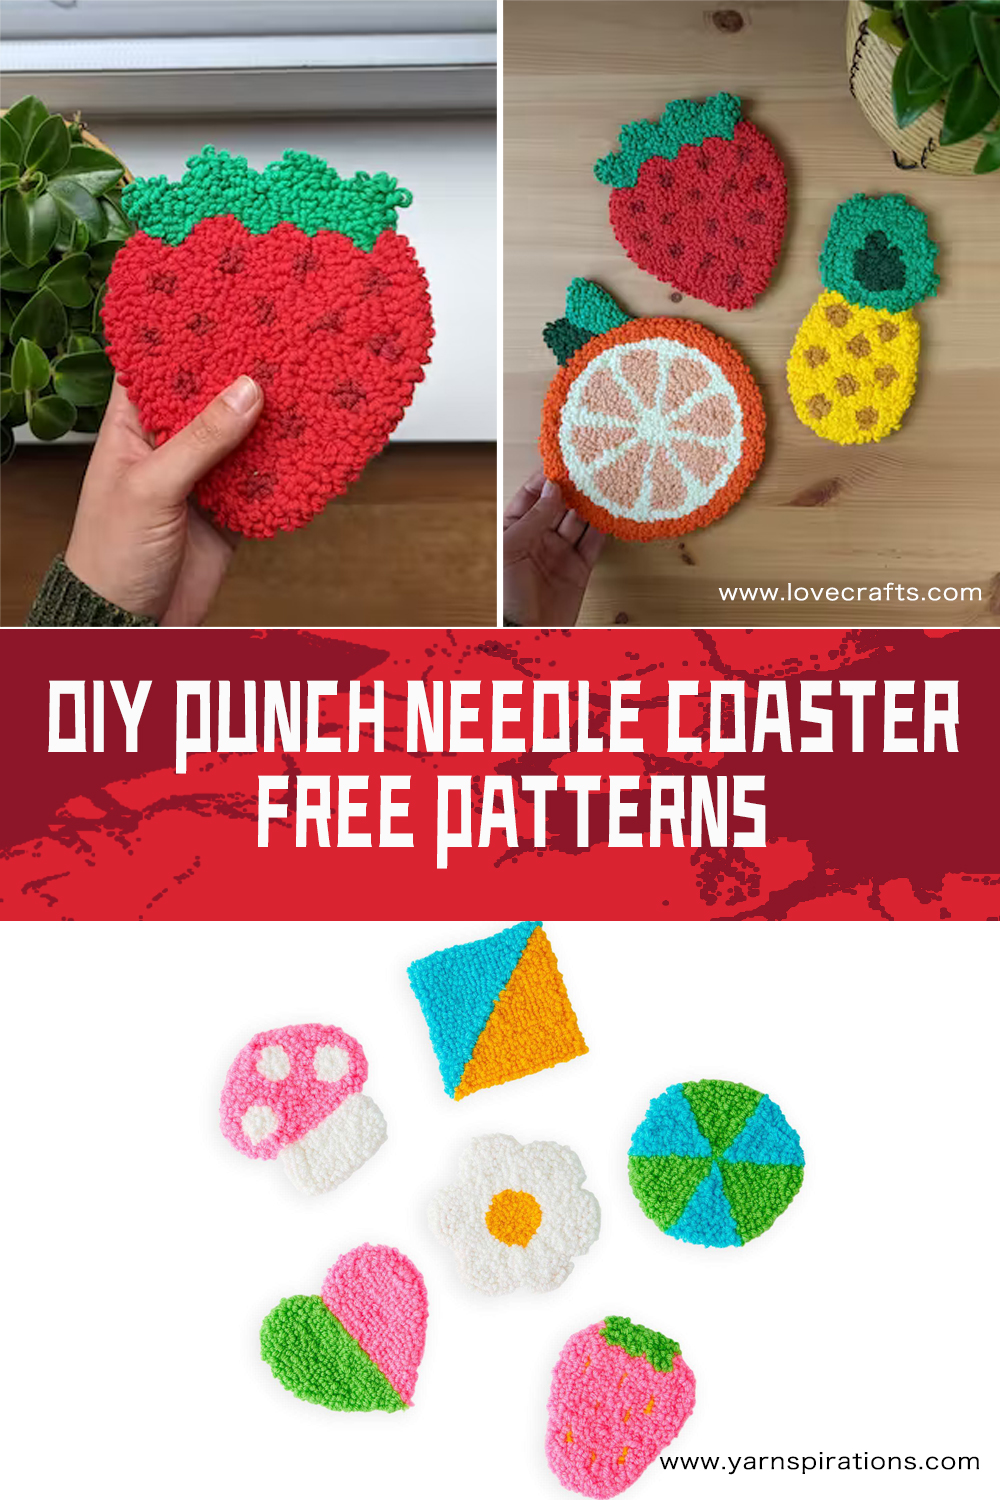 DIY Punch Needle Coaster Free Patterns 